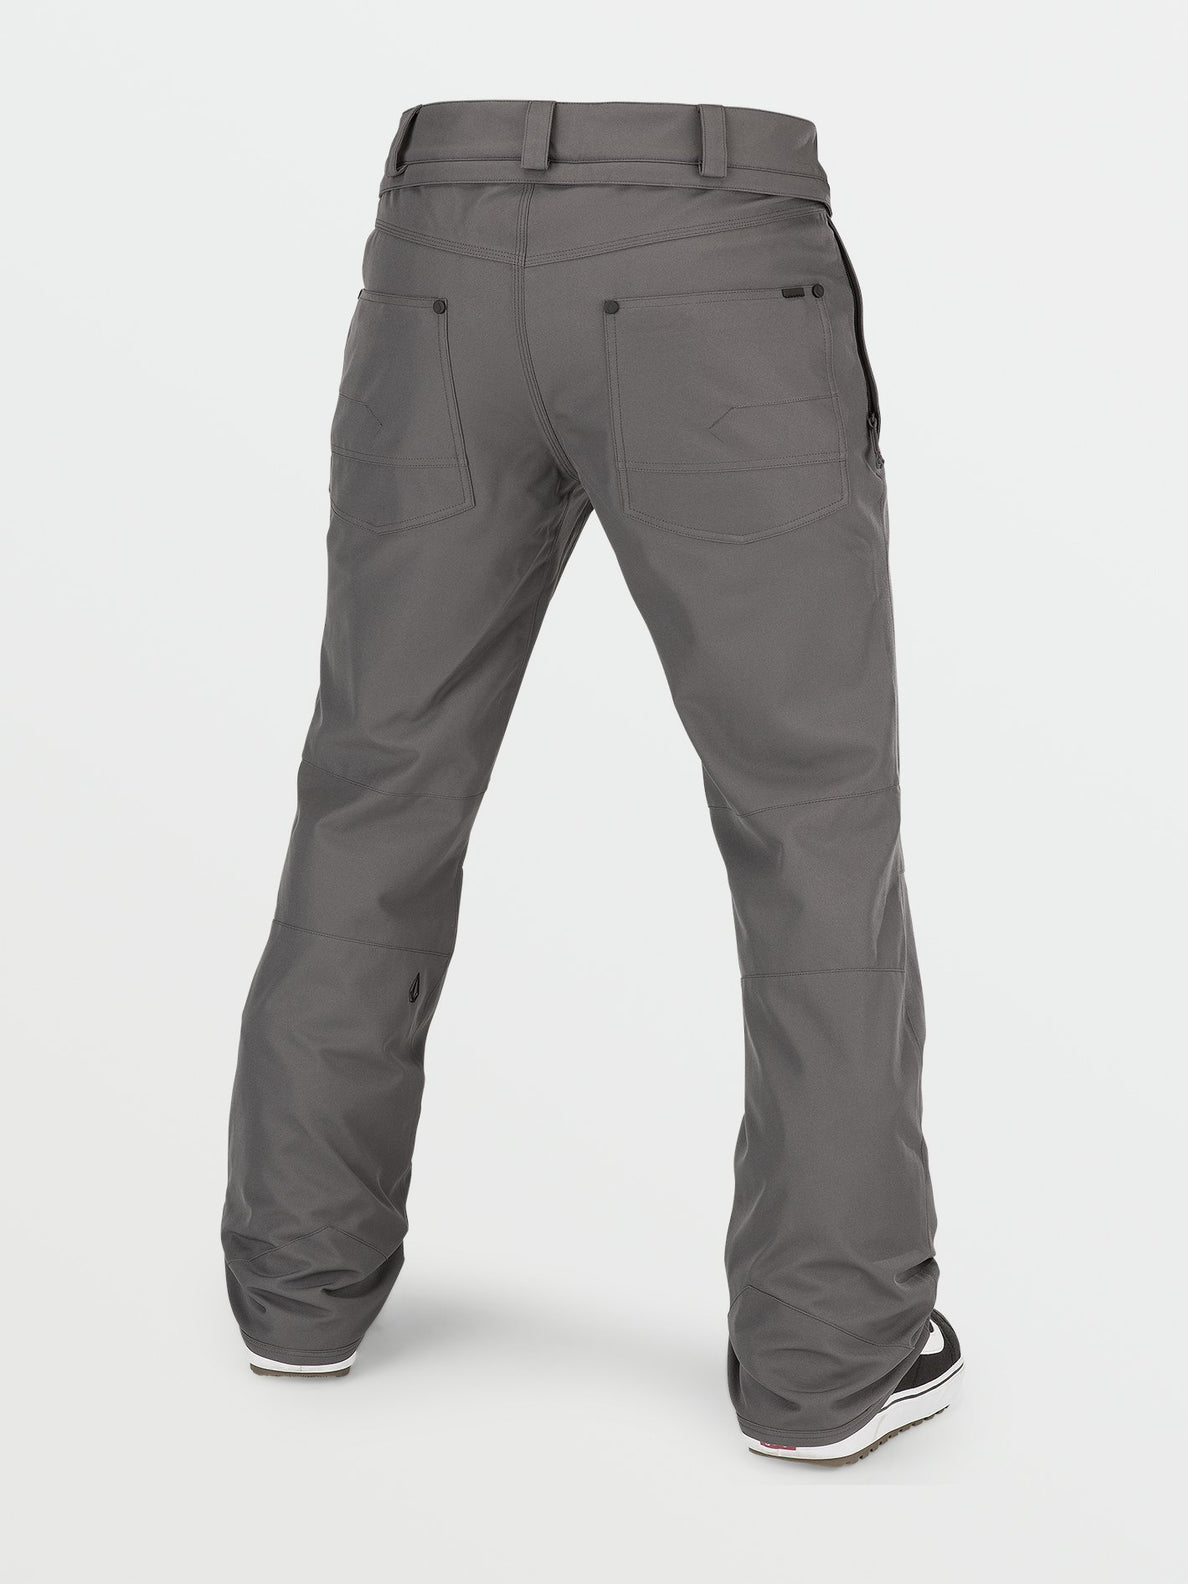 Klocker Tight Trousers - DARK GREY (G1352209_DGR) [B]